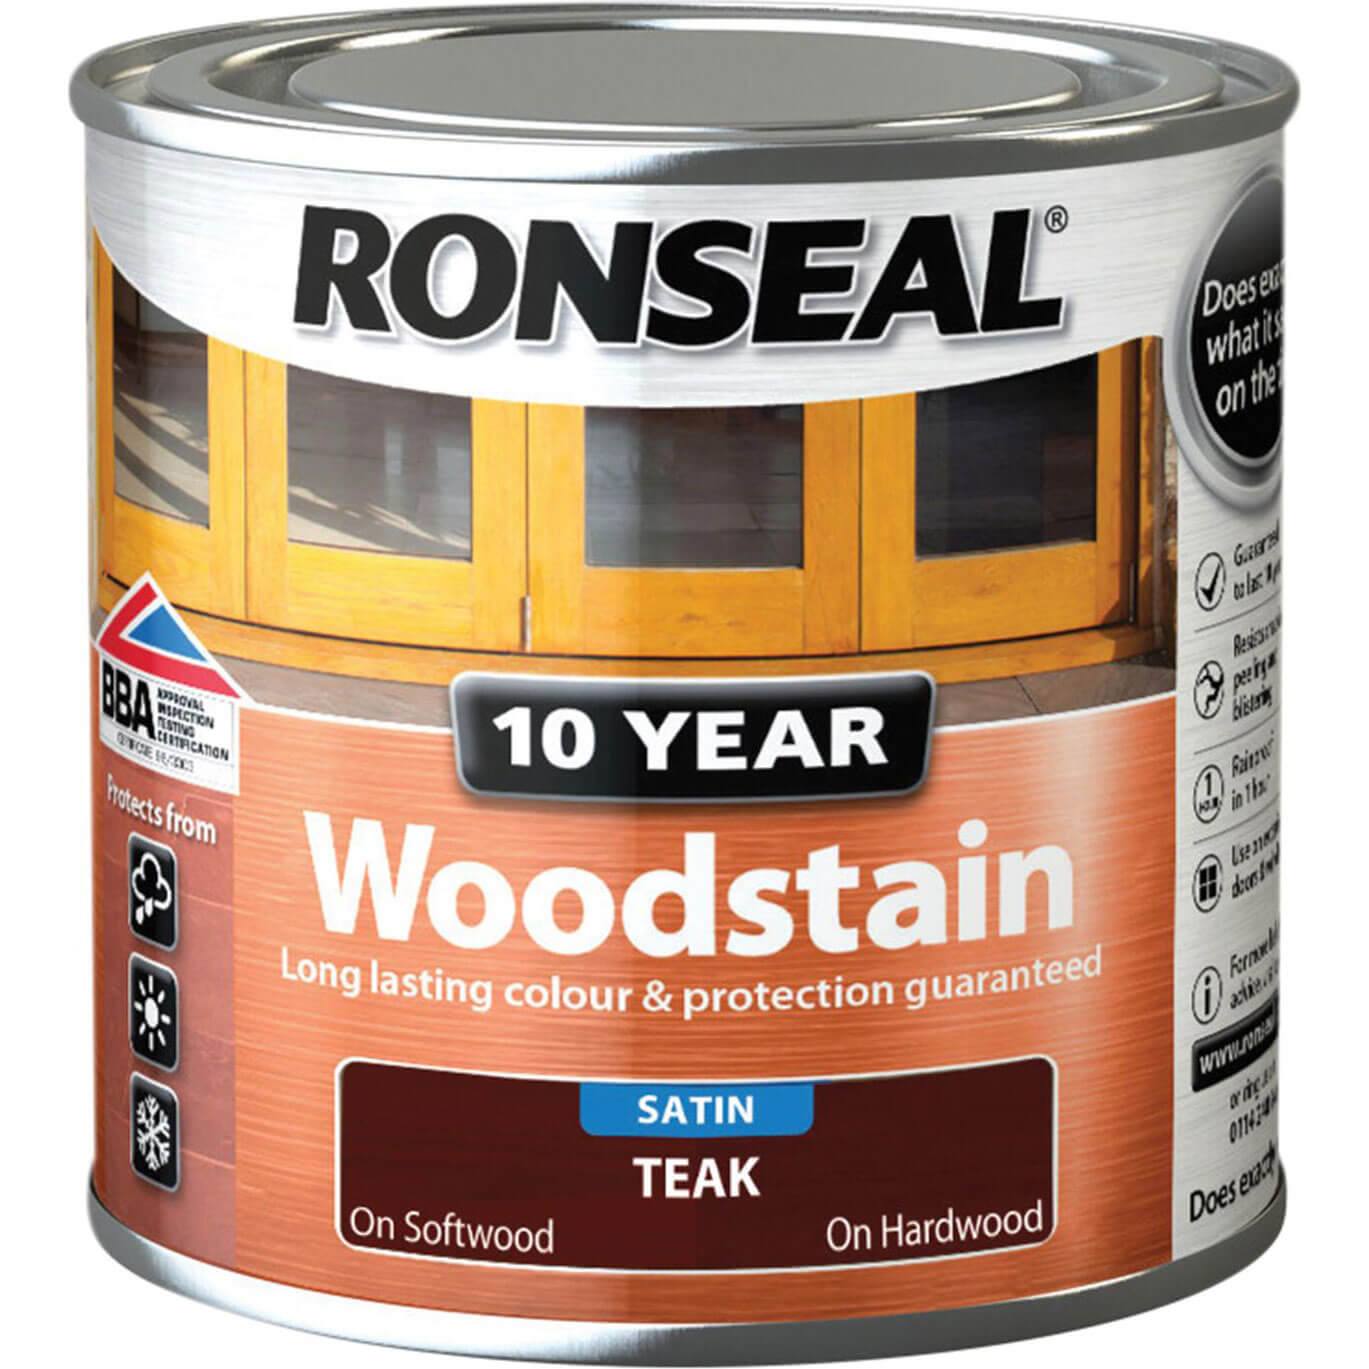 Image of Ronseal 10 Year Wood Stain Teak 250ml